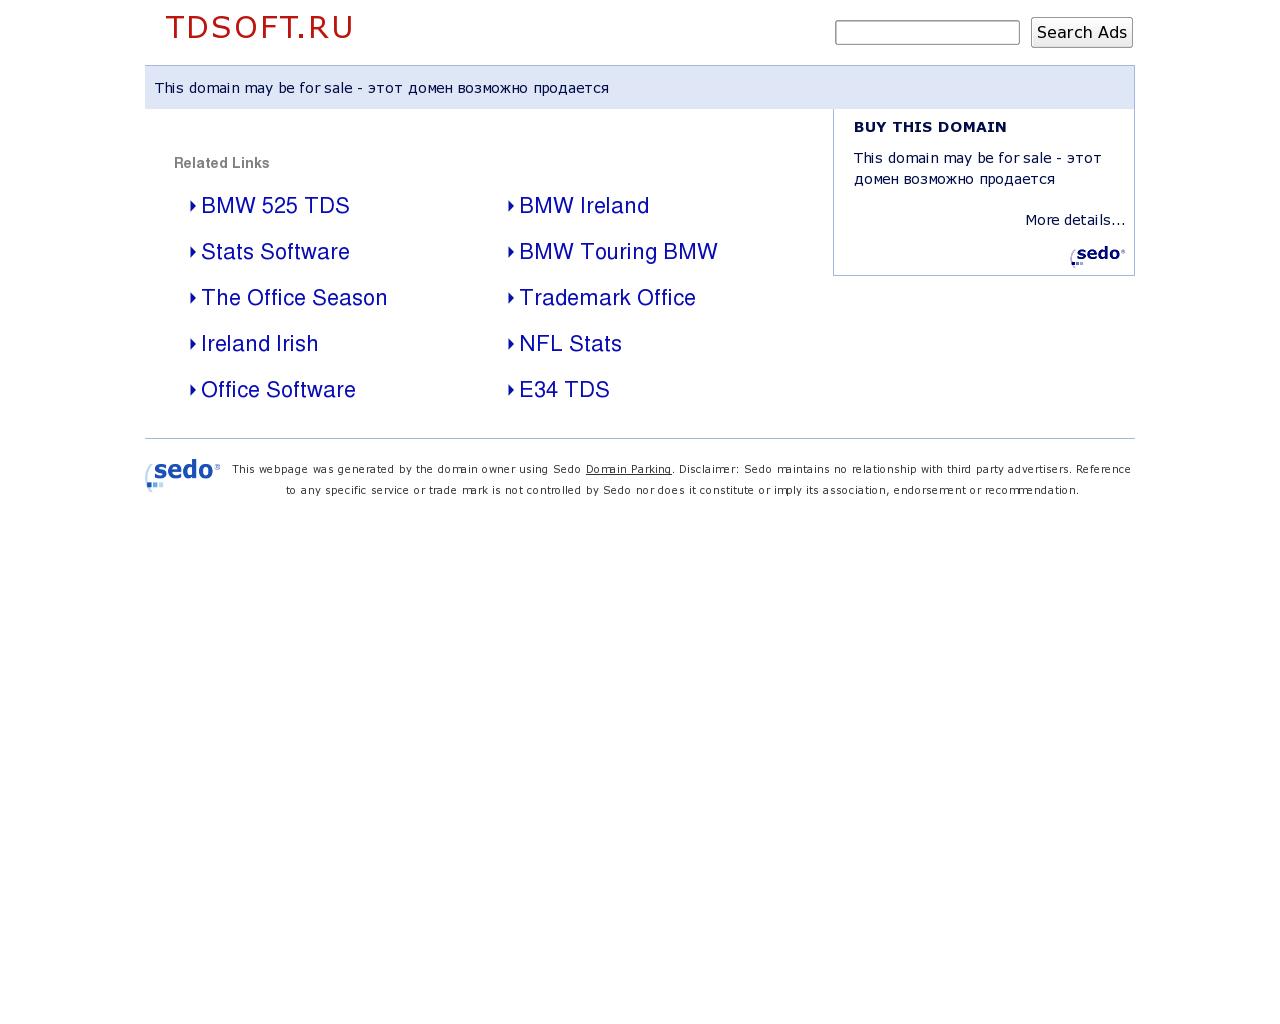 Изображение сайта tdsoft.ru в разрешении 1280x1024